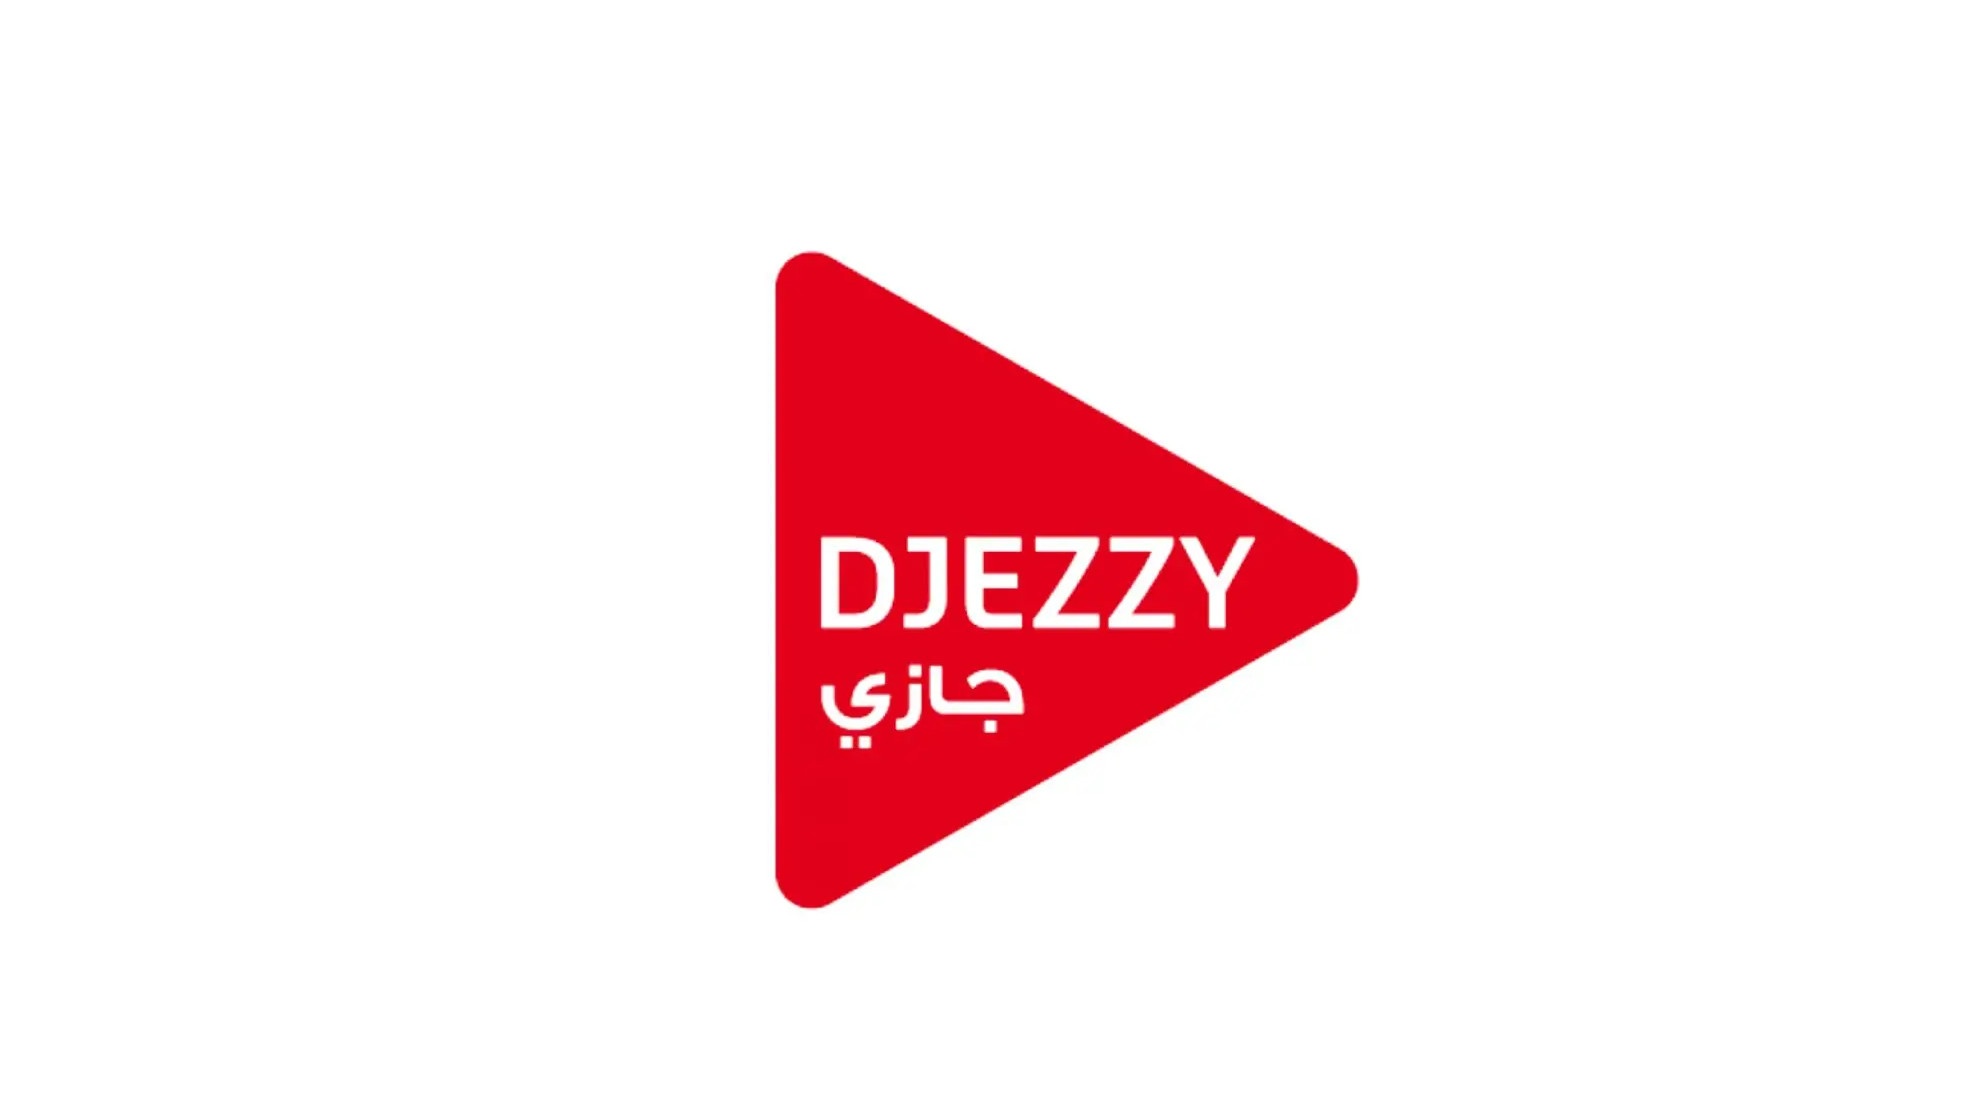 Djezzy 100 DZD Mobile Top-up DZ $1.36